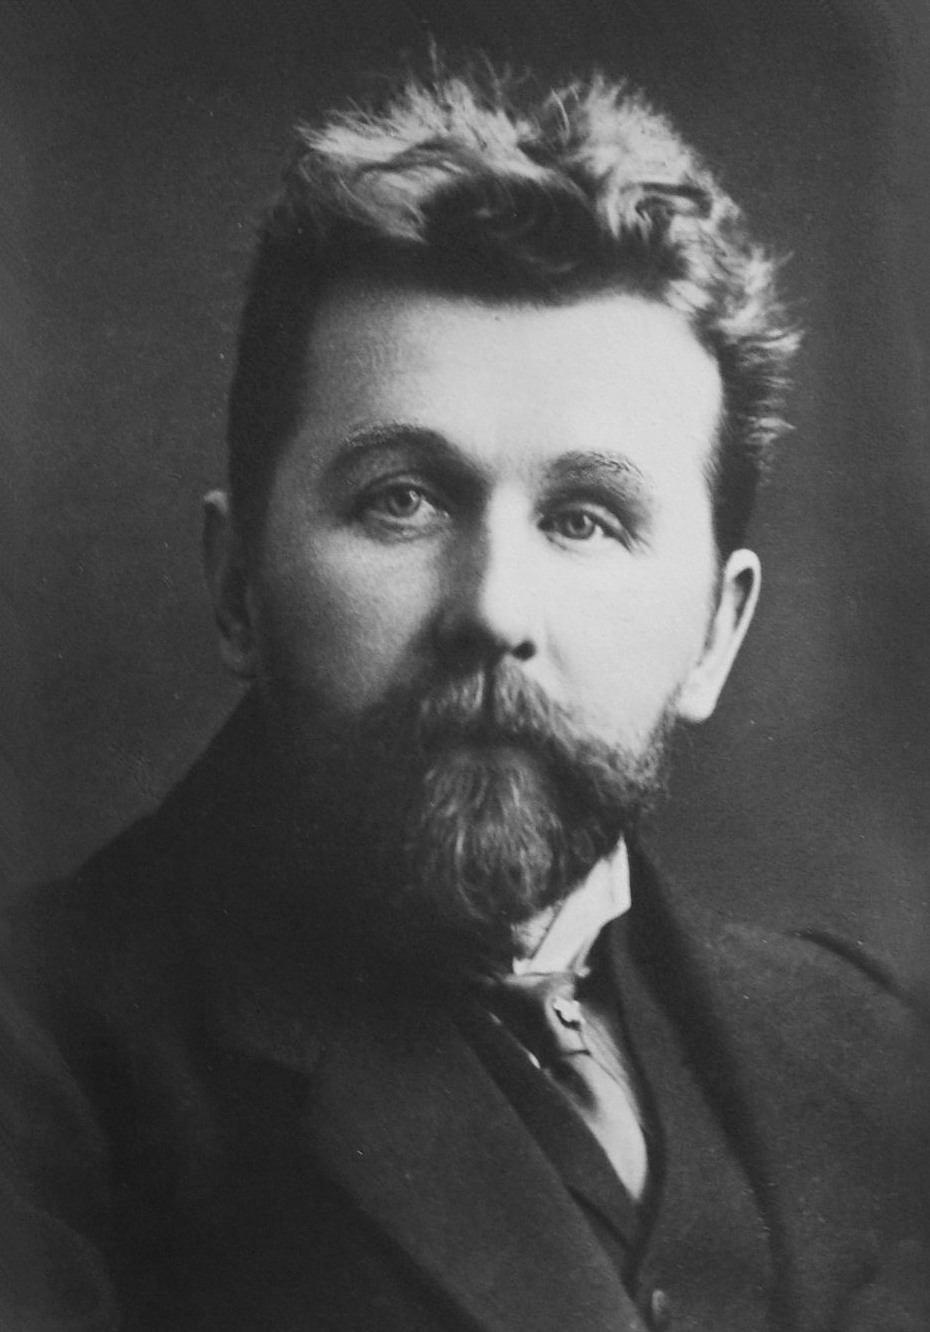 Gretchaninoff portrait from 1910